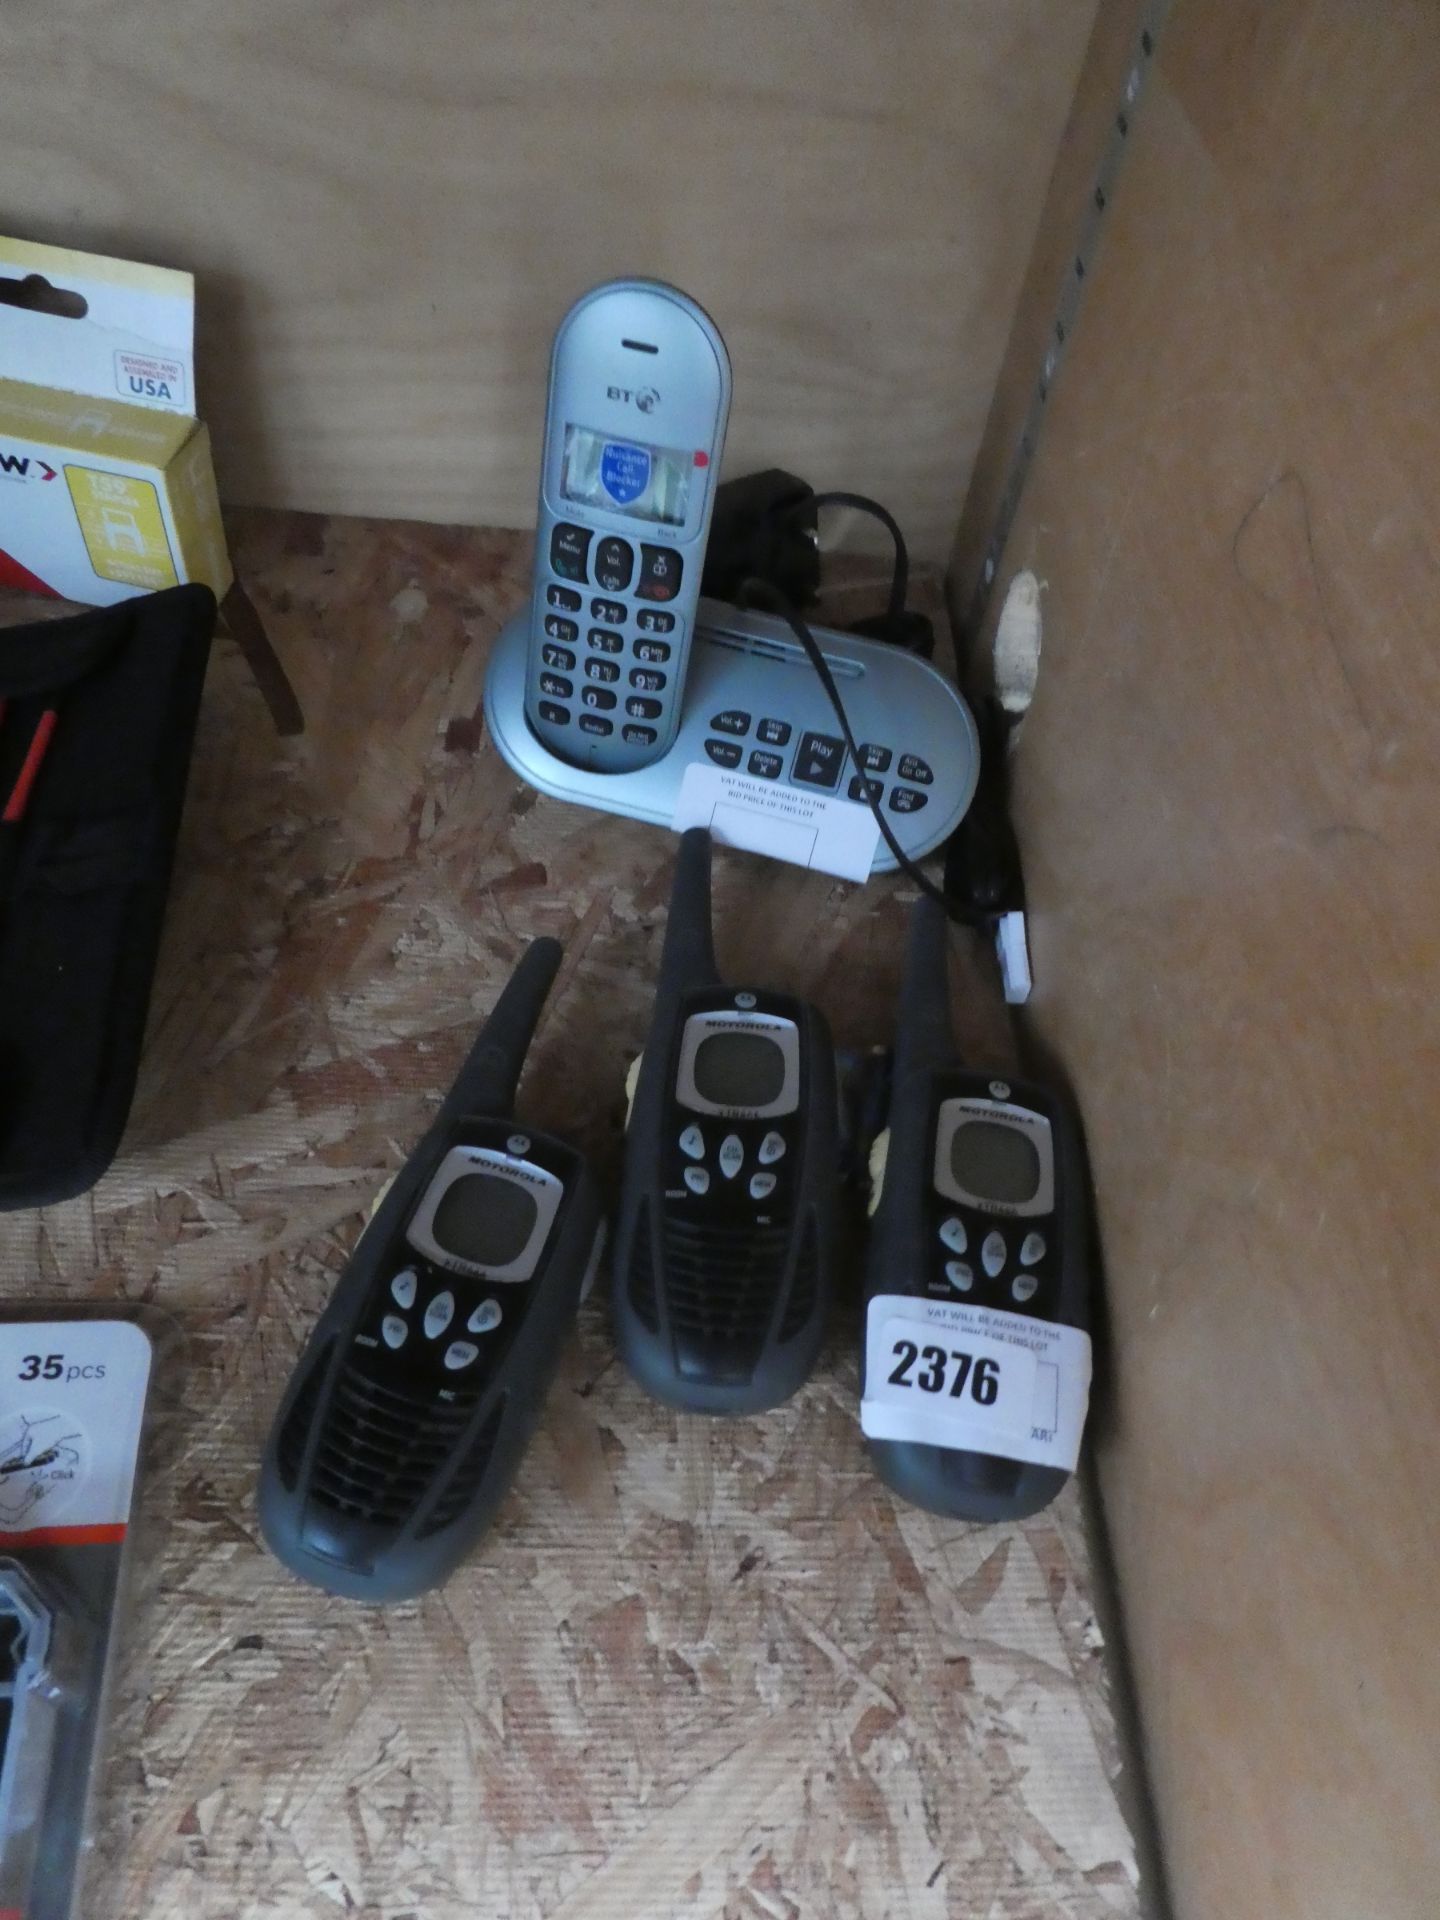 3 Motorola XTR446 hand sets and BT cordless phone